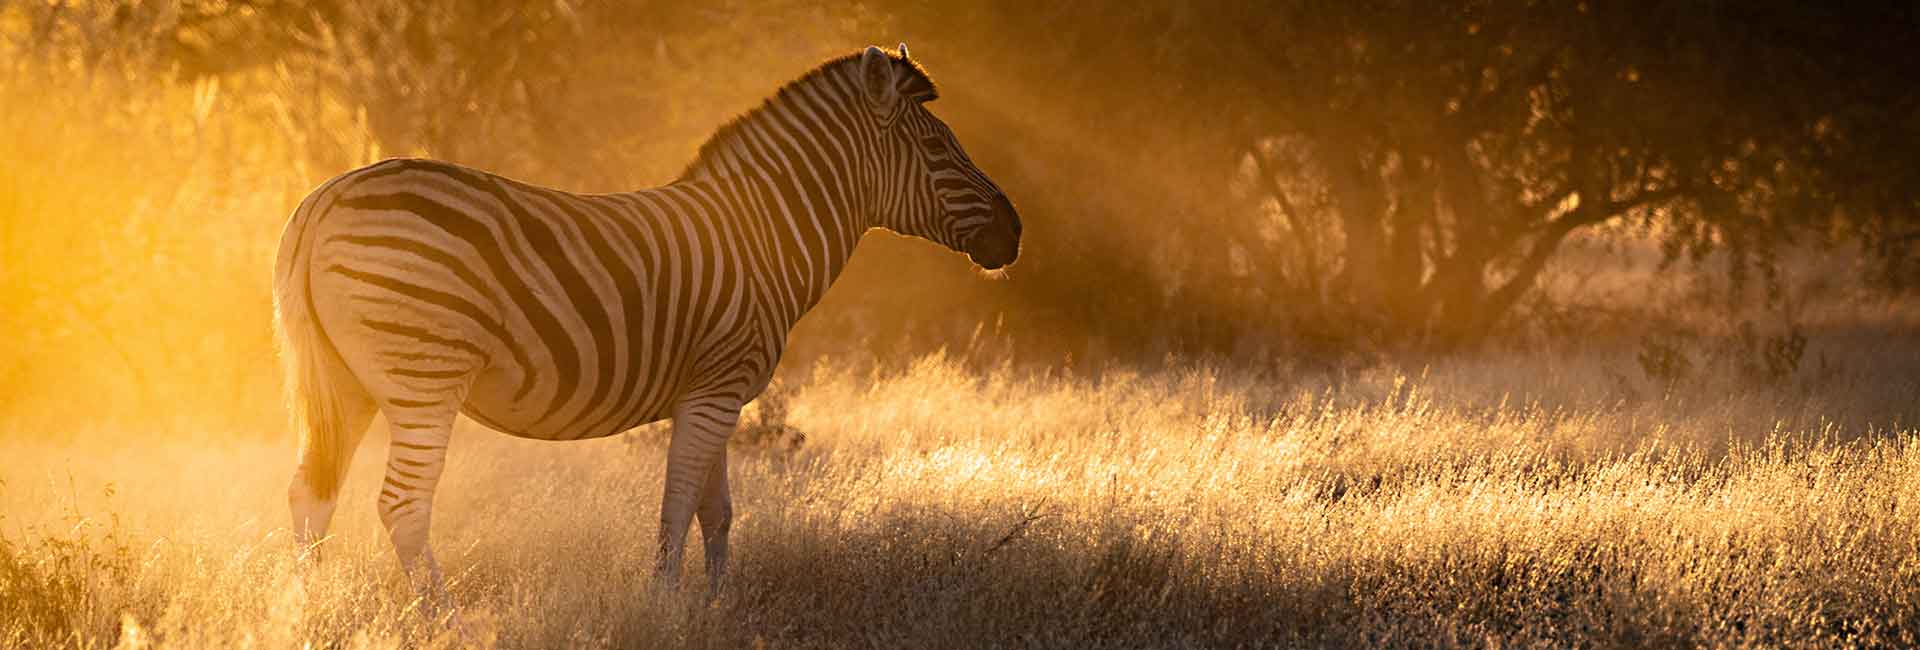 zebra-hunting-somerby-safaris-banner